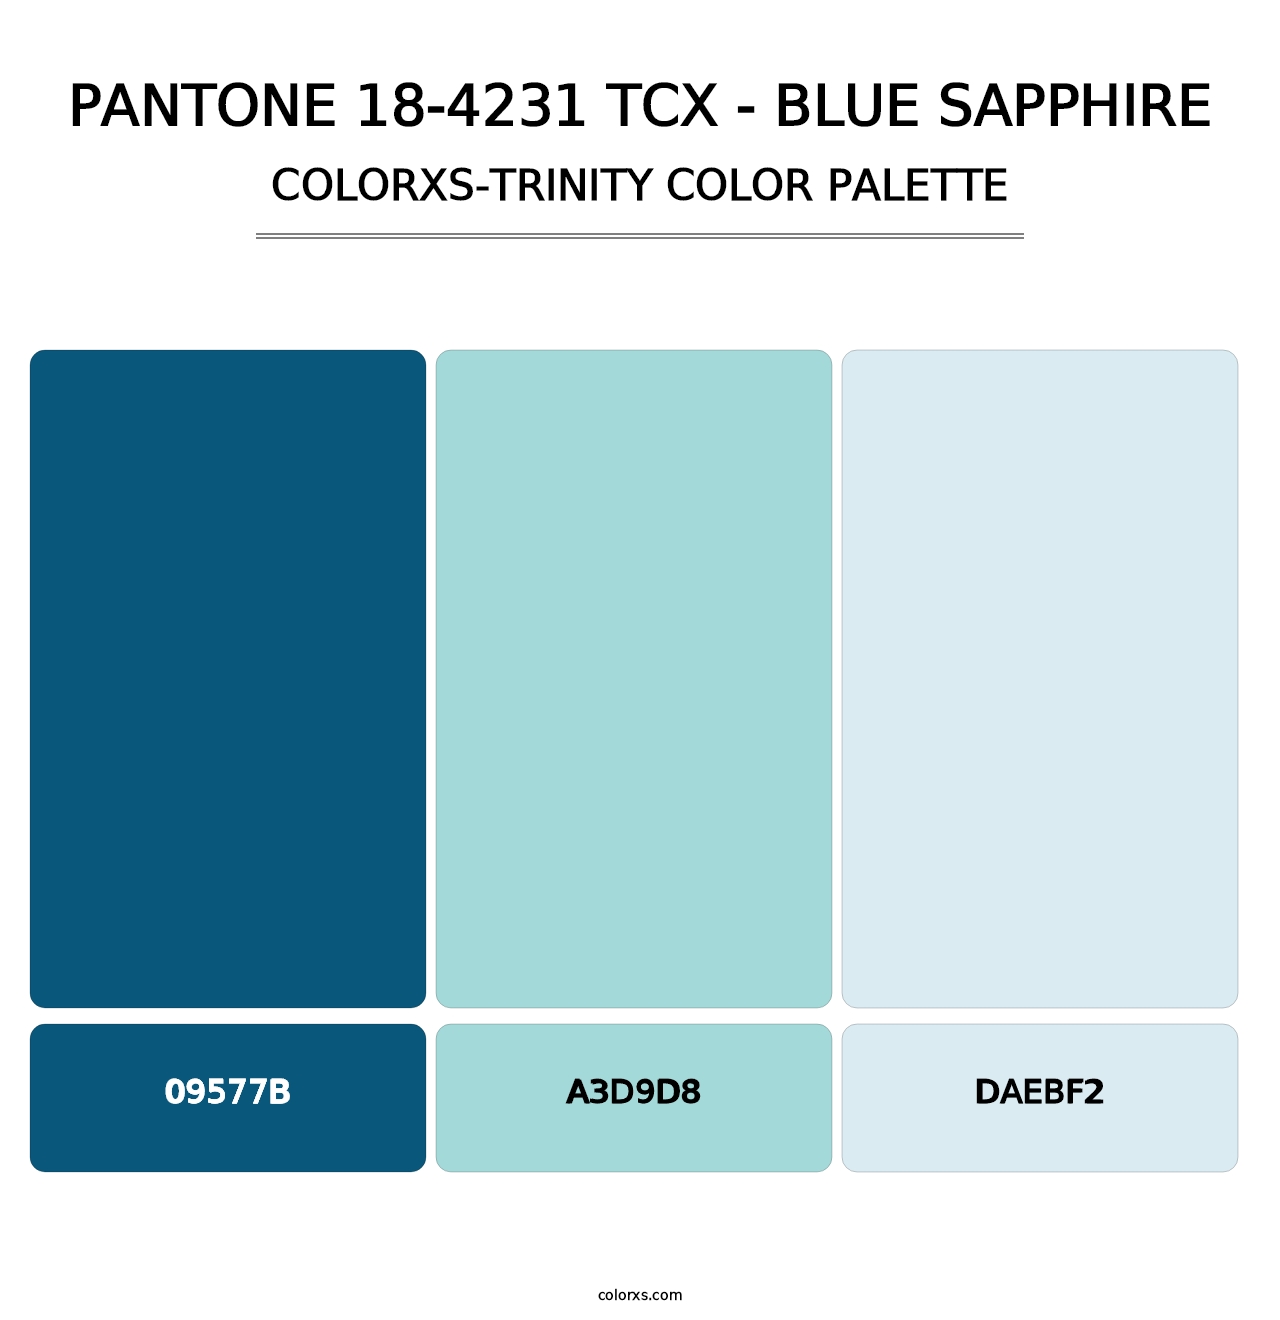 PANTONE 18-4231 TCX - Blue Sapphire - Colorxs Trinity Palette